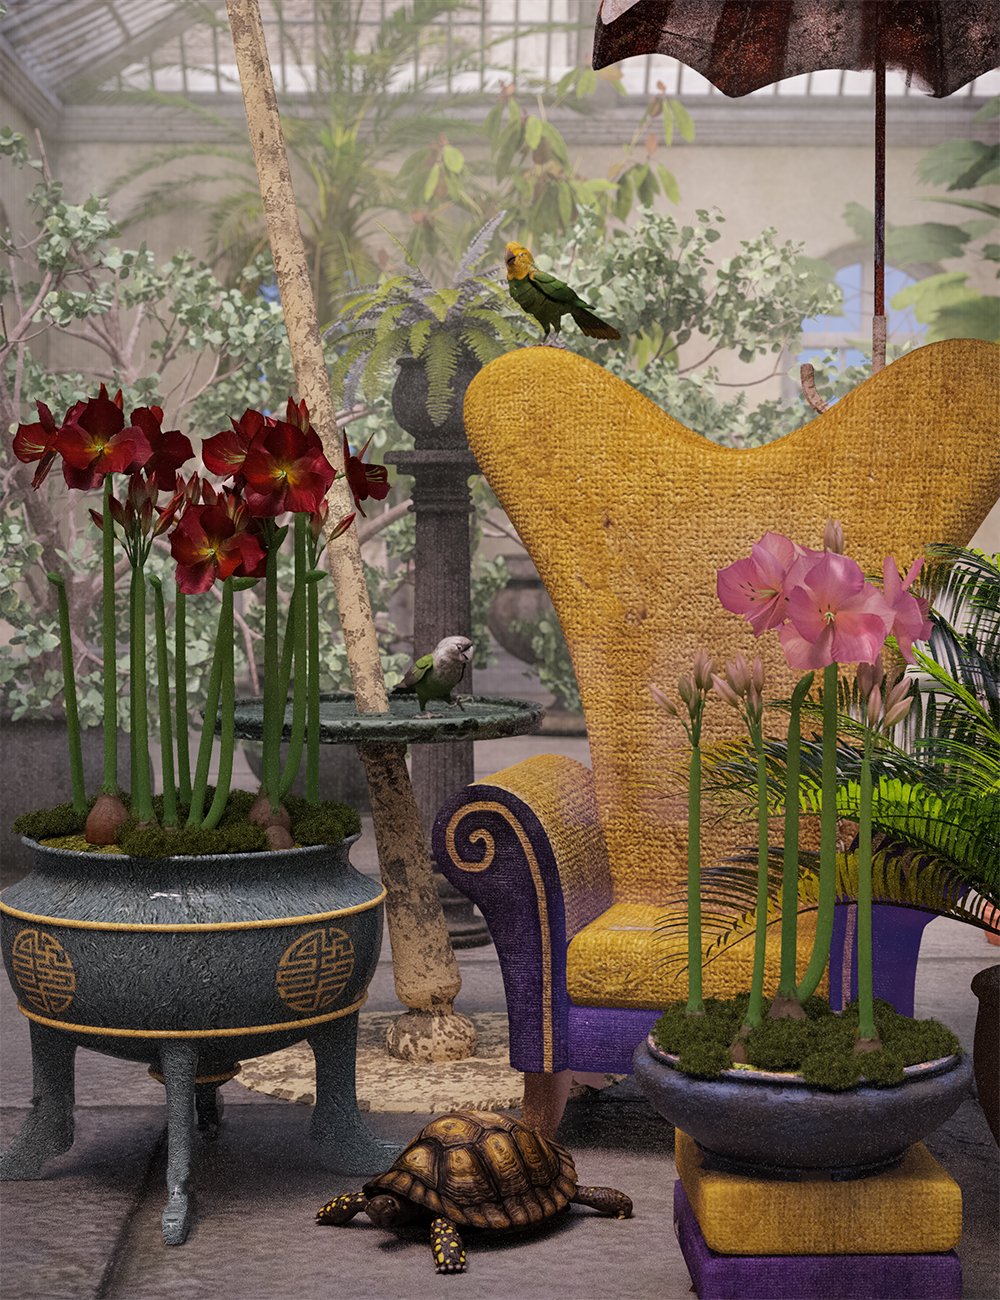 Tropical Flowers - Amaryllis by: MartinJFrost, 3D Models by Daz 3D